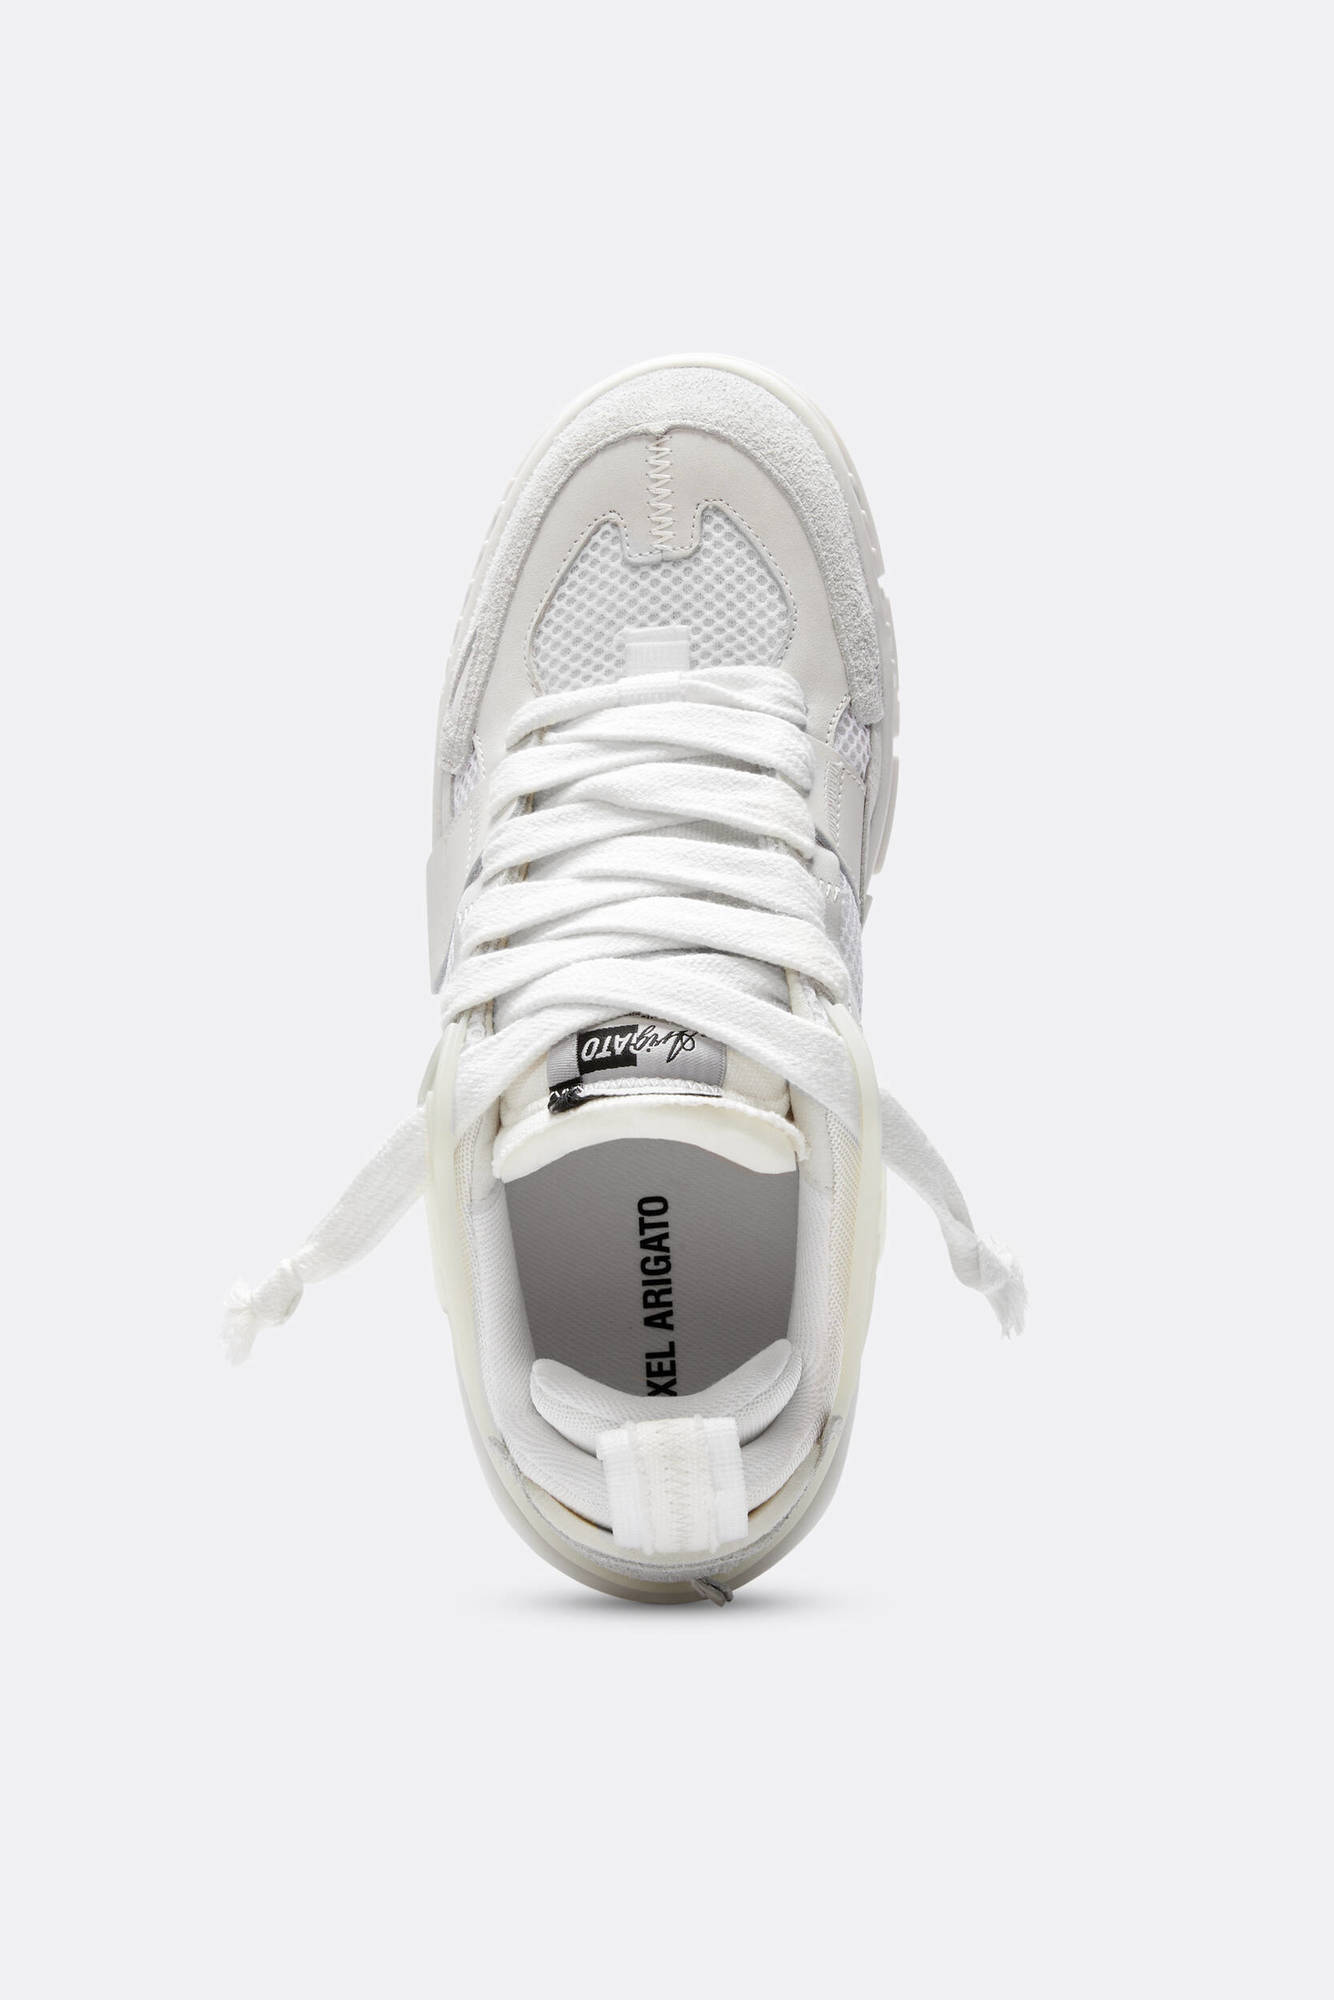 AXEL ARIGATO Area Patchwork Sneaker in White/White 44